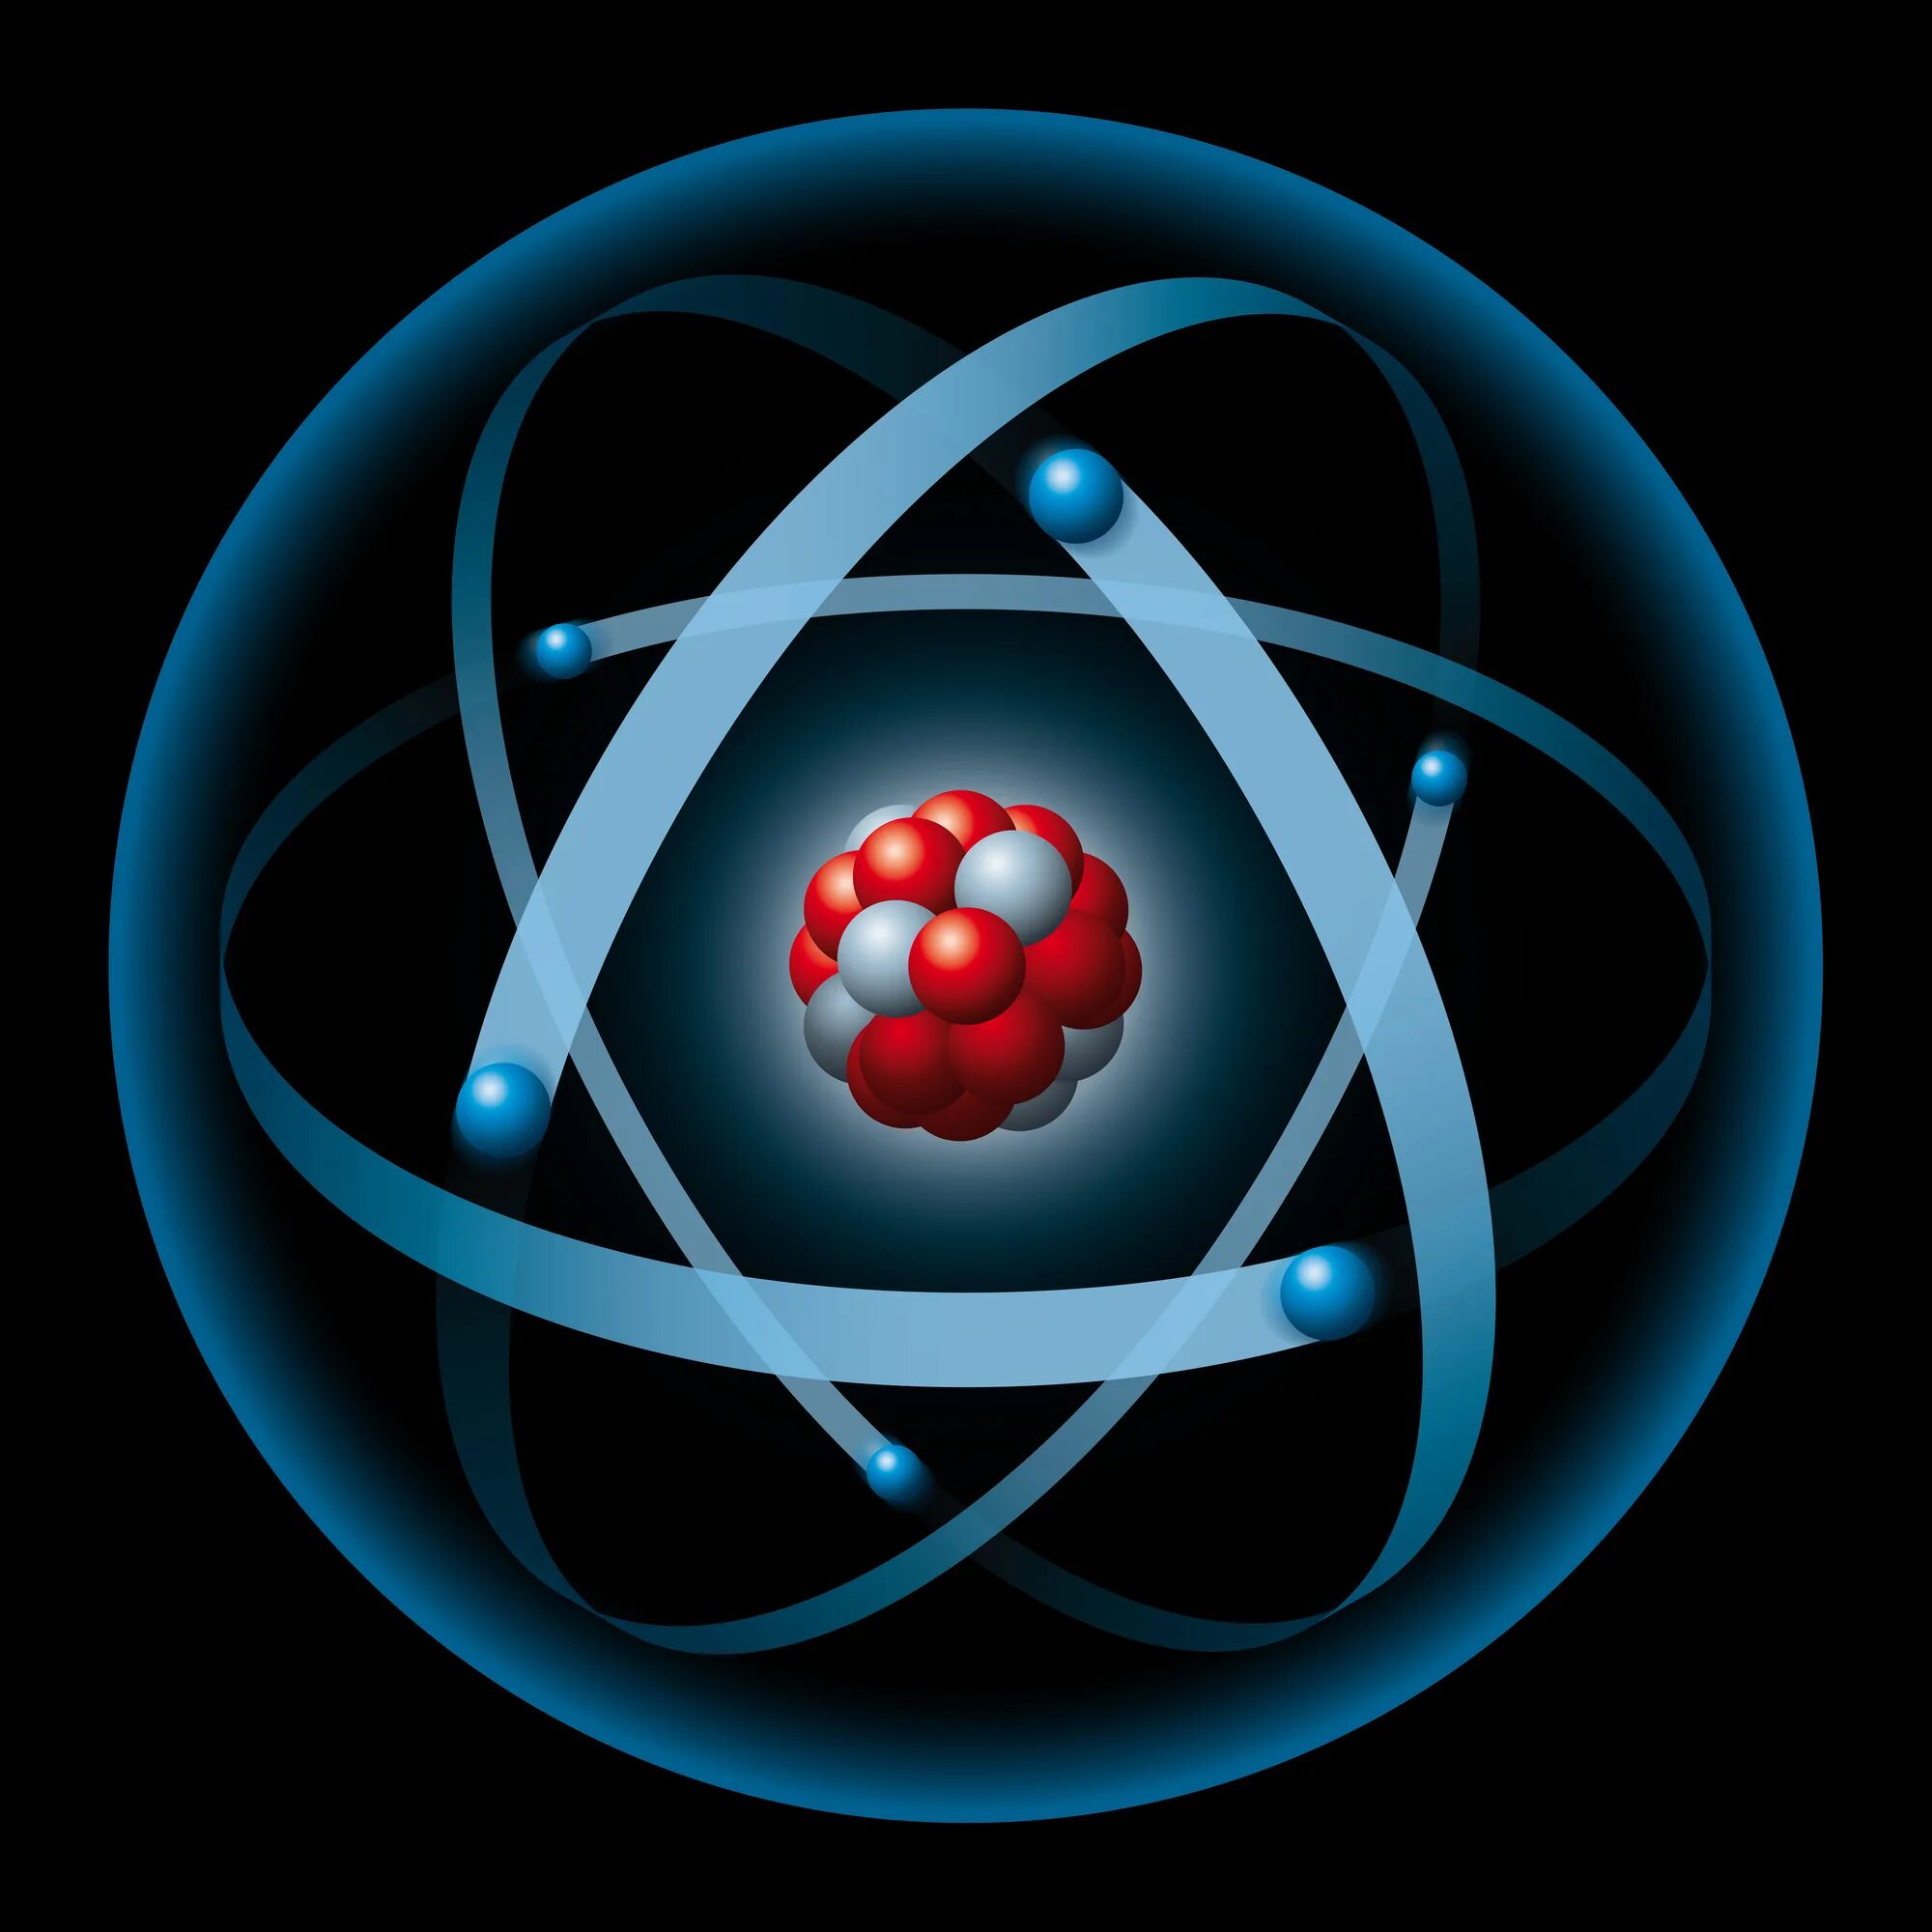 Атом длс. Молекула атом ядро. Ядро и электроны в атоме. Атом Протон нейтрон электрон. Атом 3 Протона 3 электрона.